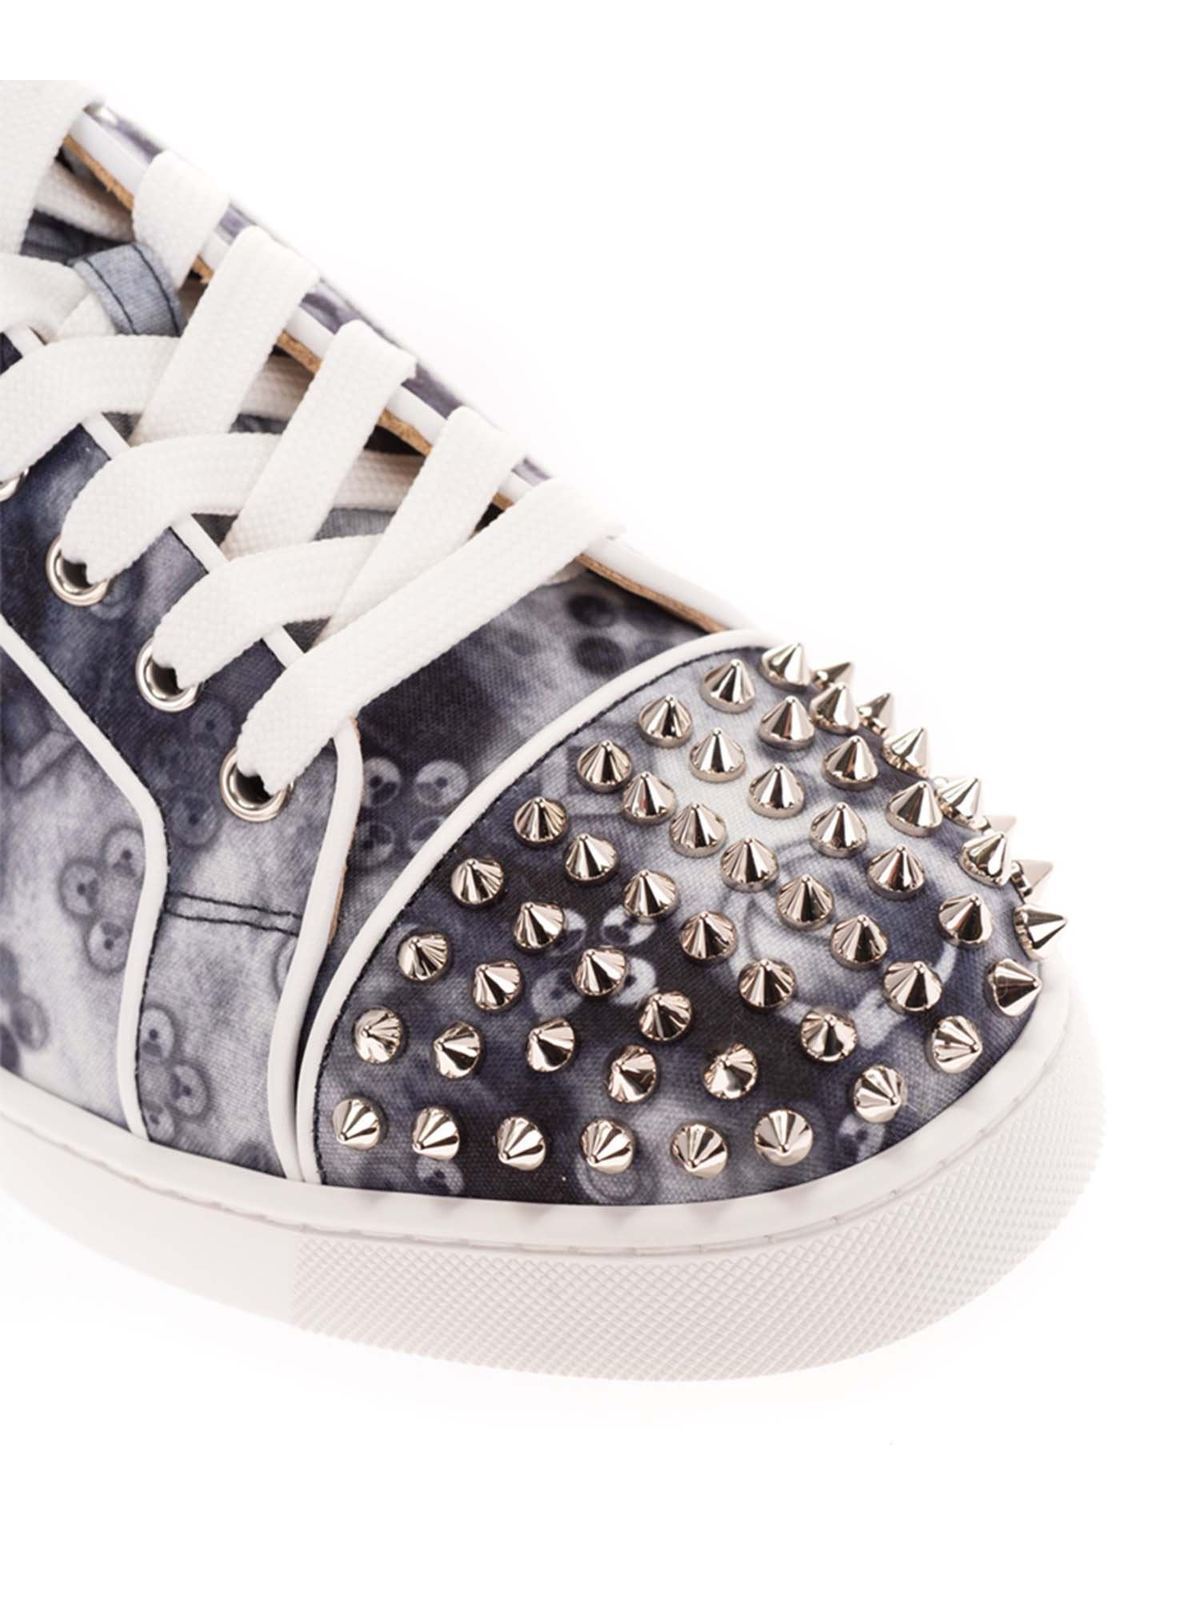 Christian Louboutin Multi/Silver Louis Junior Spikes Orlato Shoes